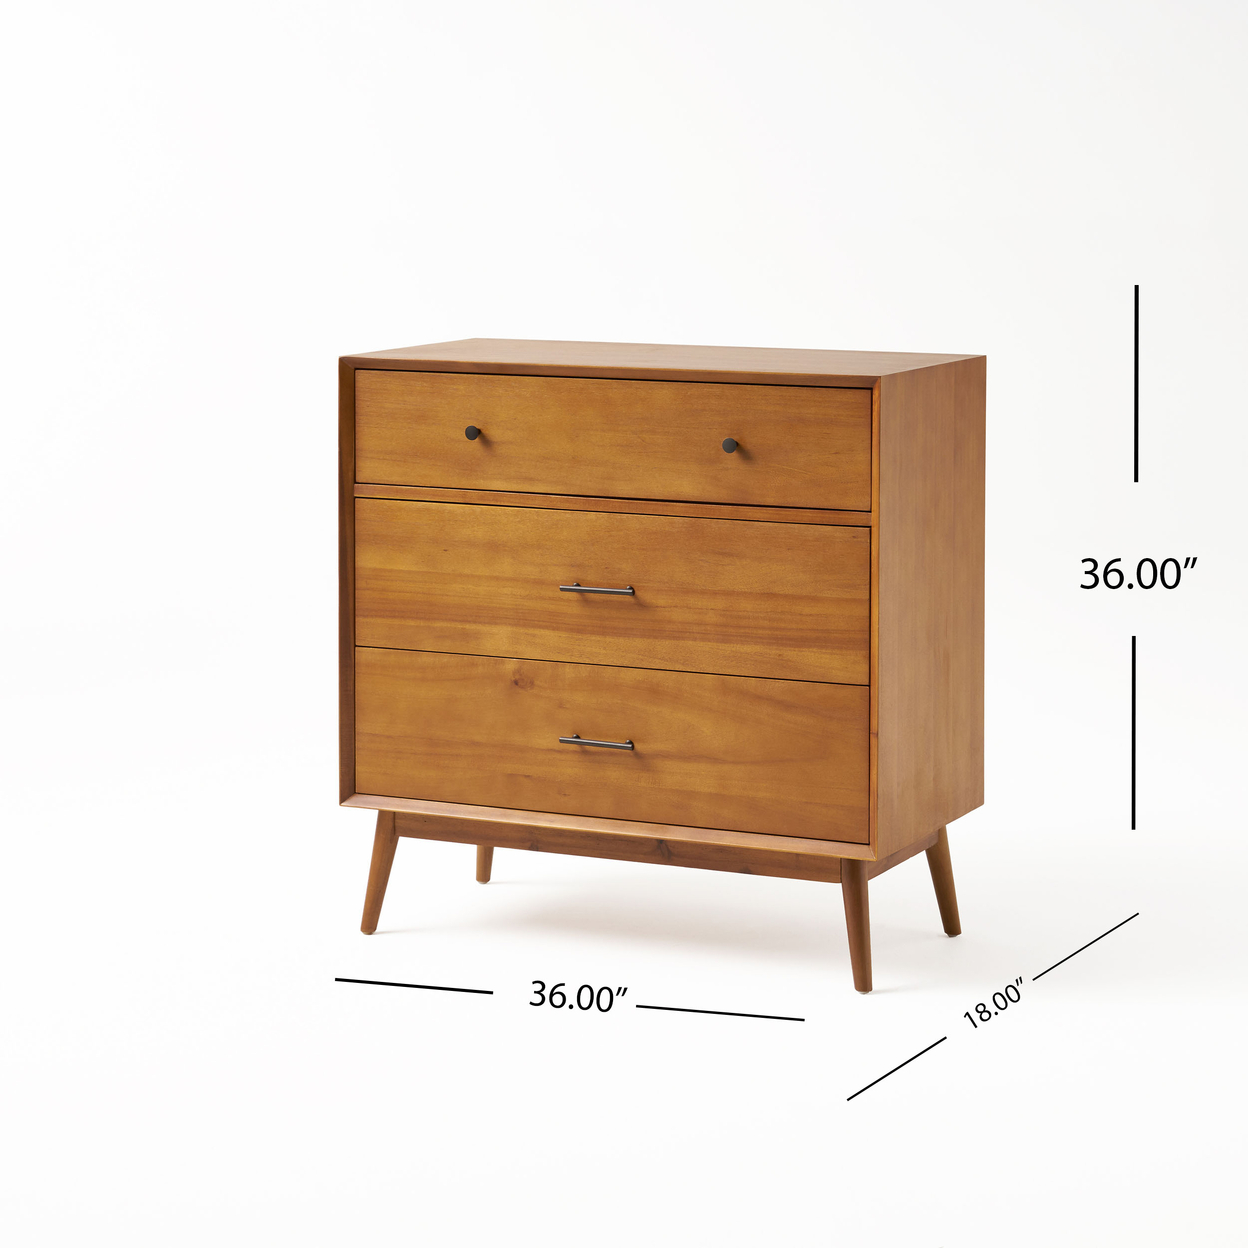 OkiOKi Mid-Century Three Drawer Dresser - Natural Brown